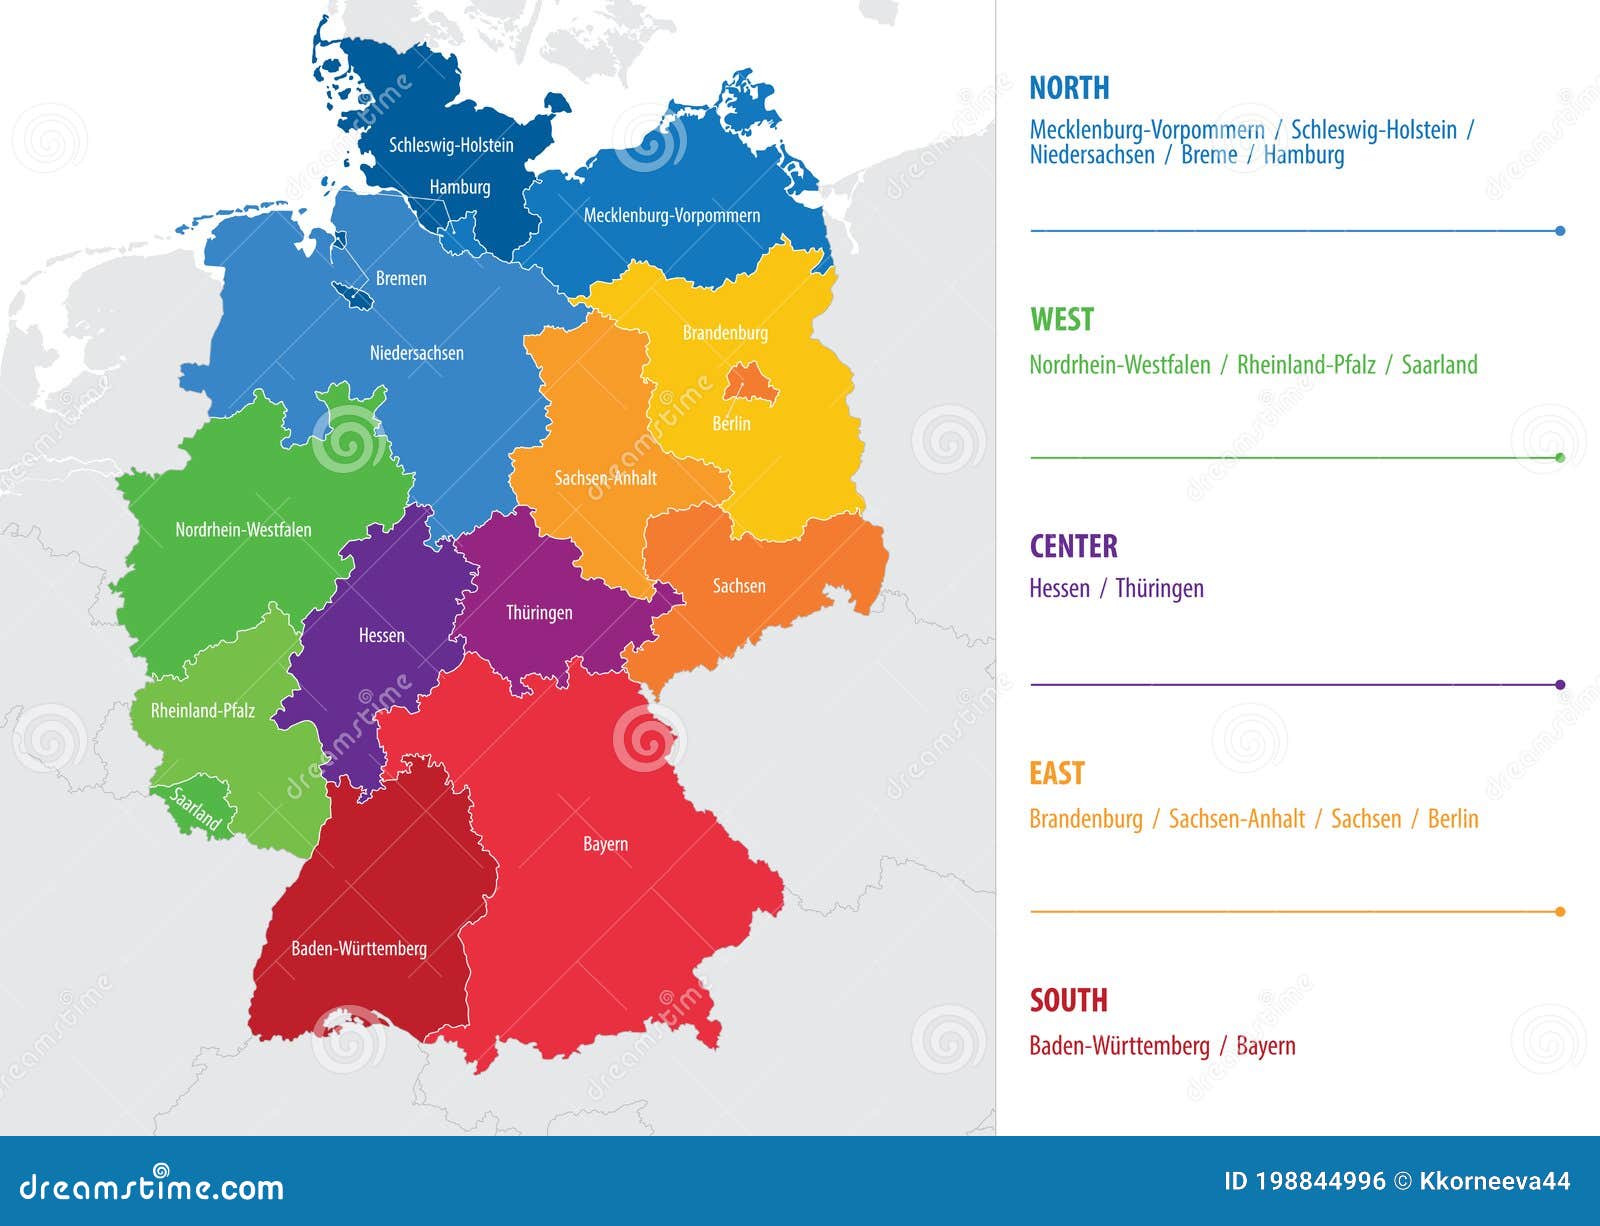 deutschlandkarte德国地图矢量图片素材-编号26108460-图行天下